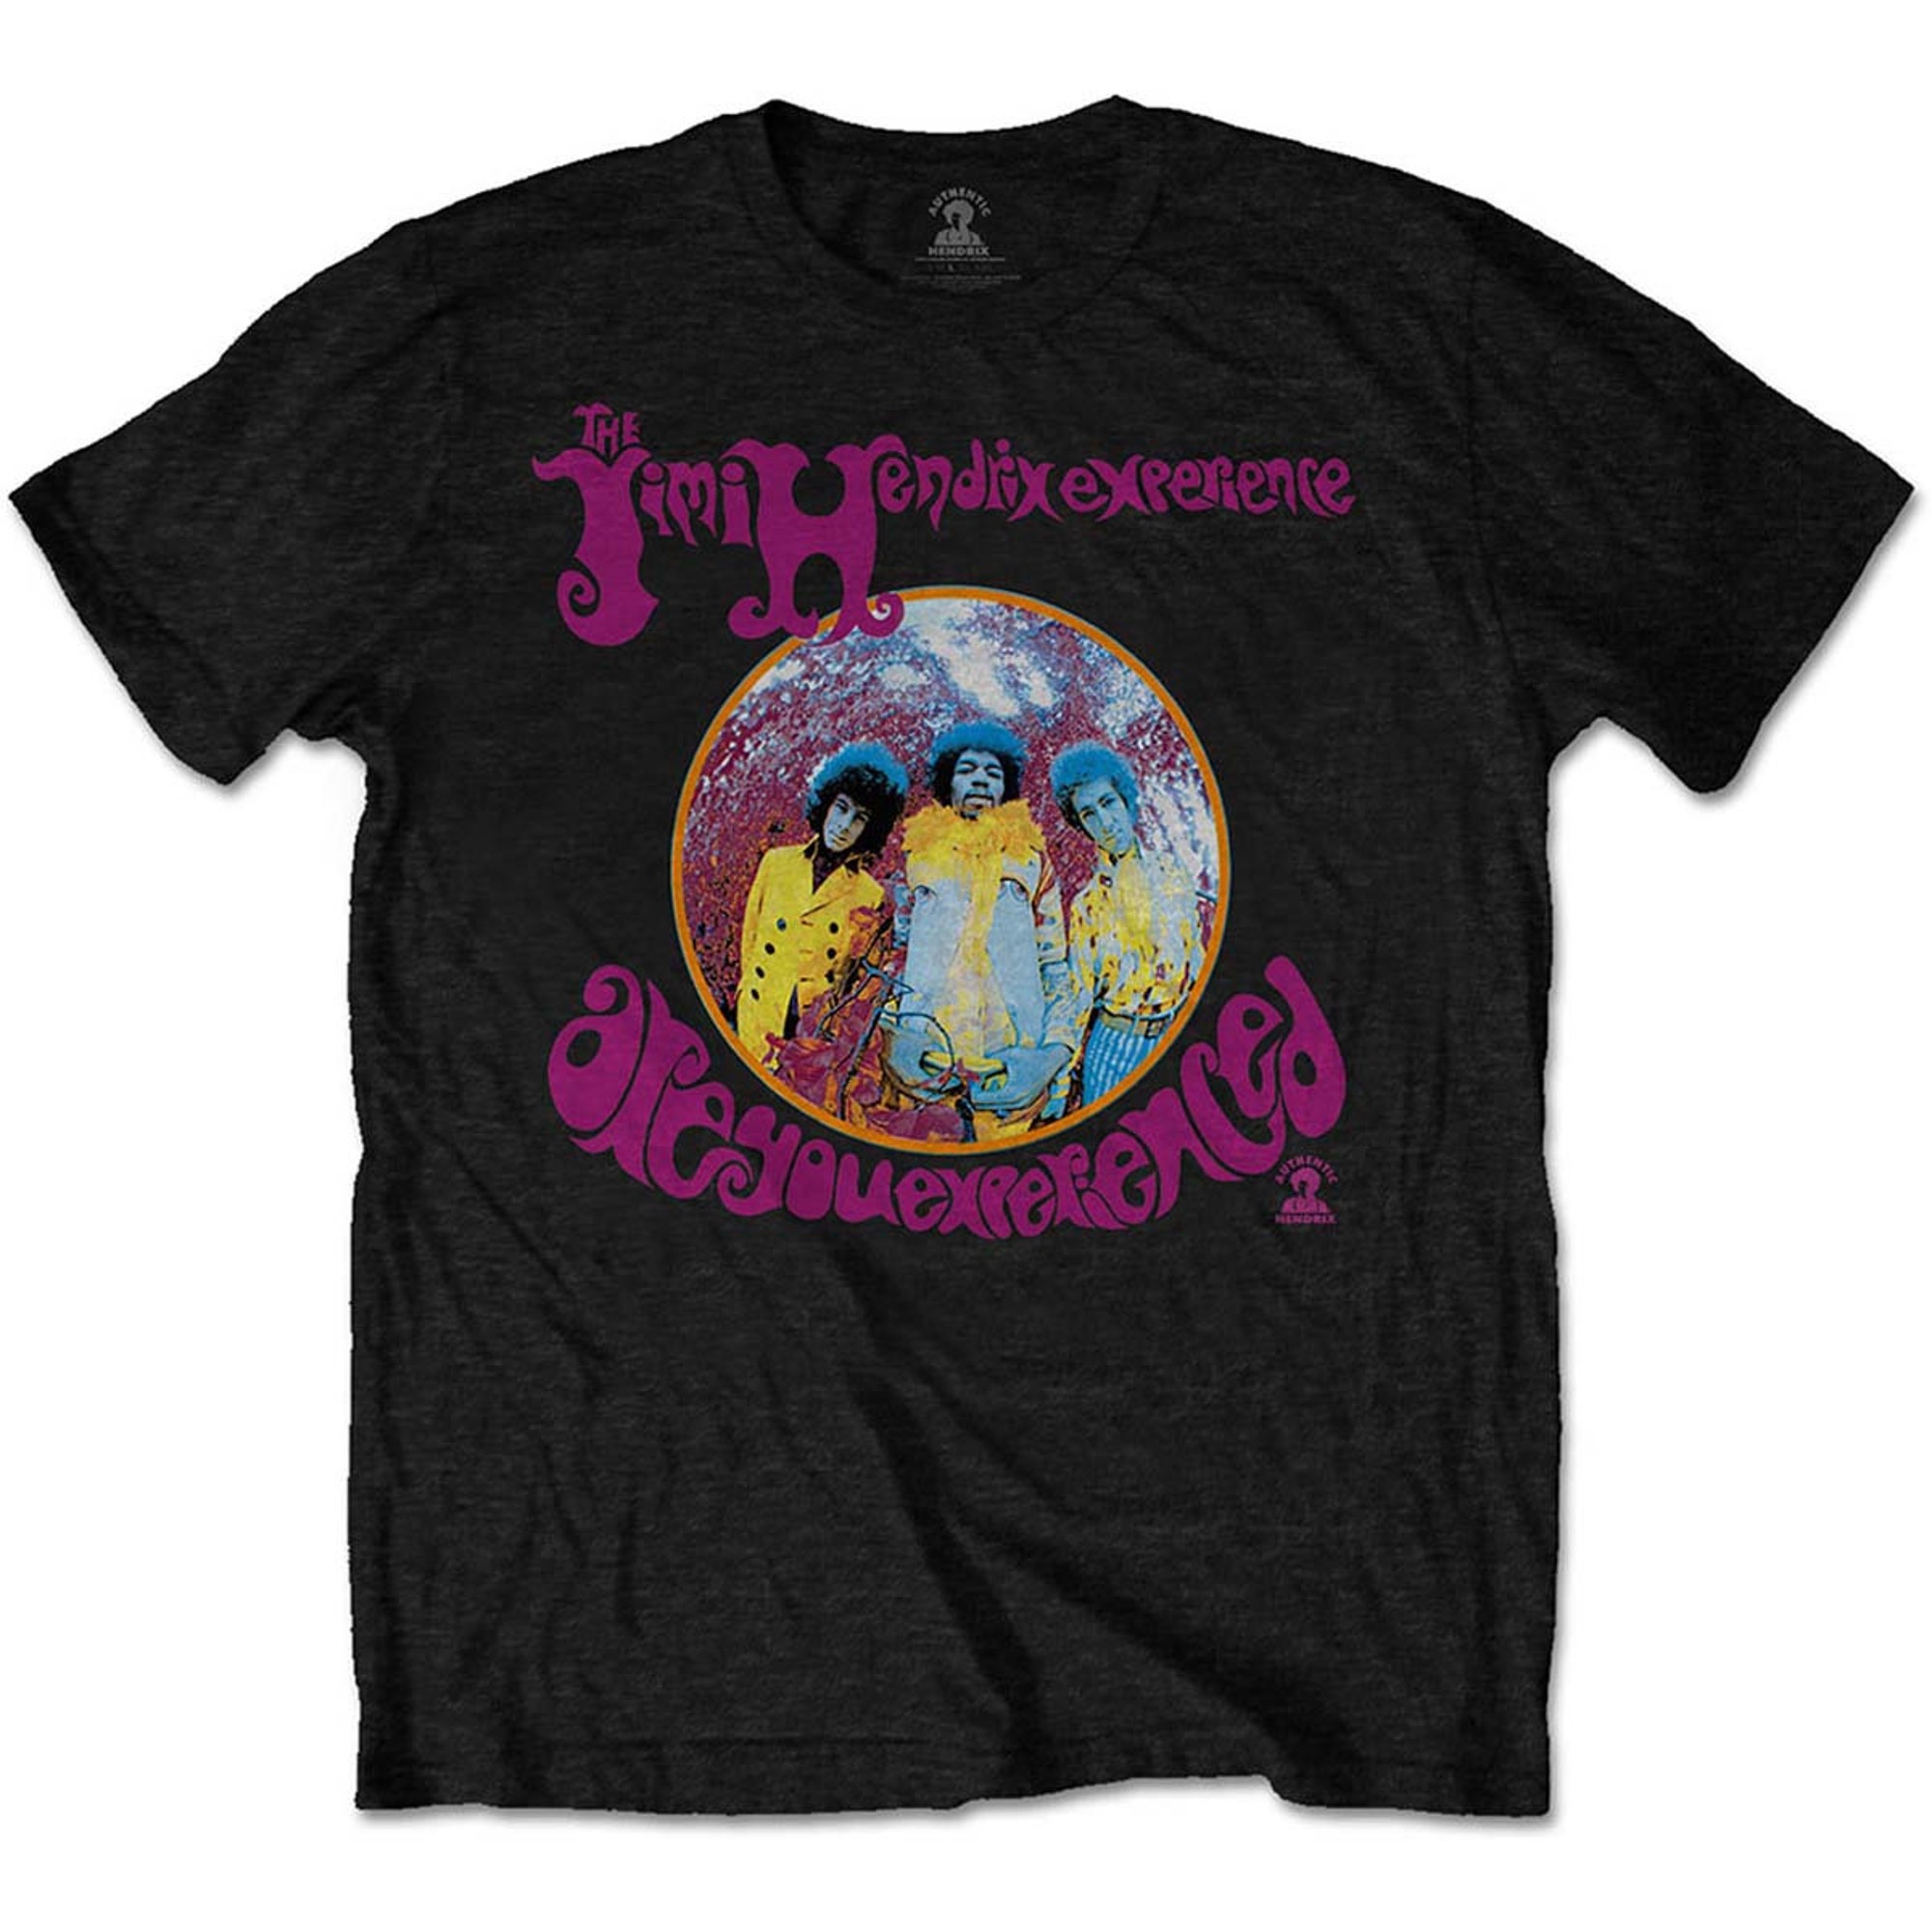 Black Jimi Hendrix Are You Experienced Tee T-Shirt